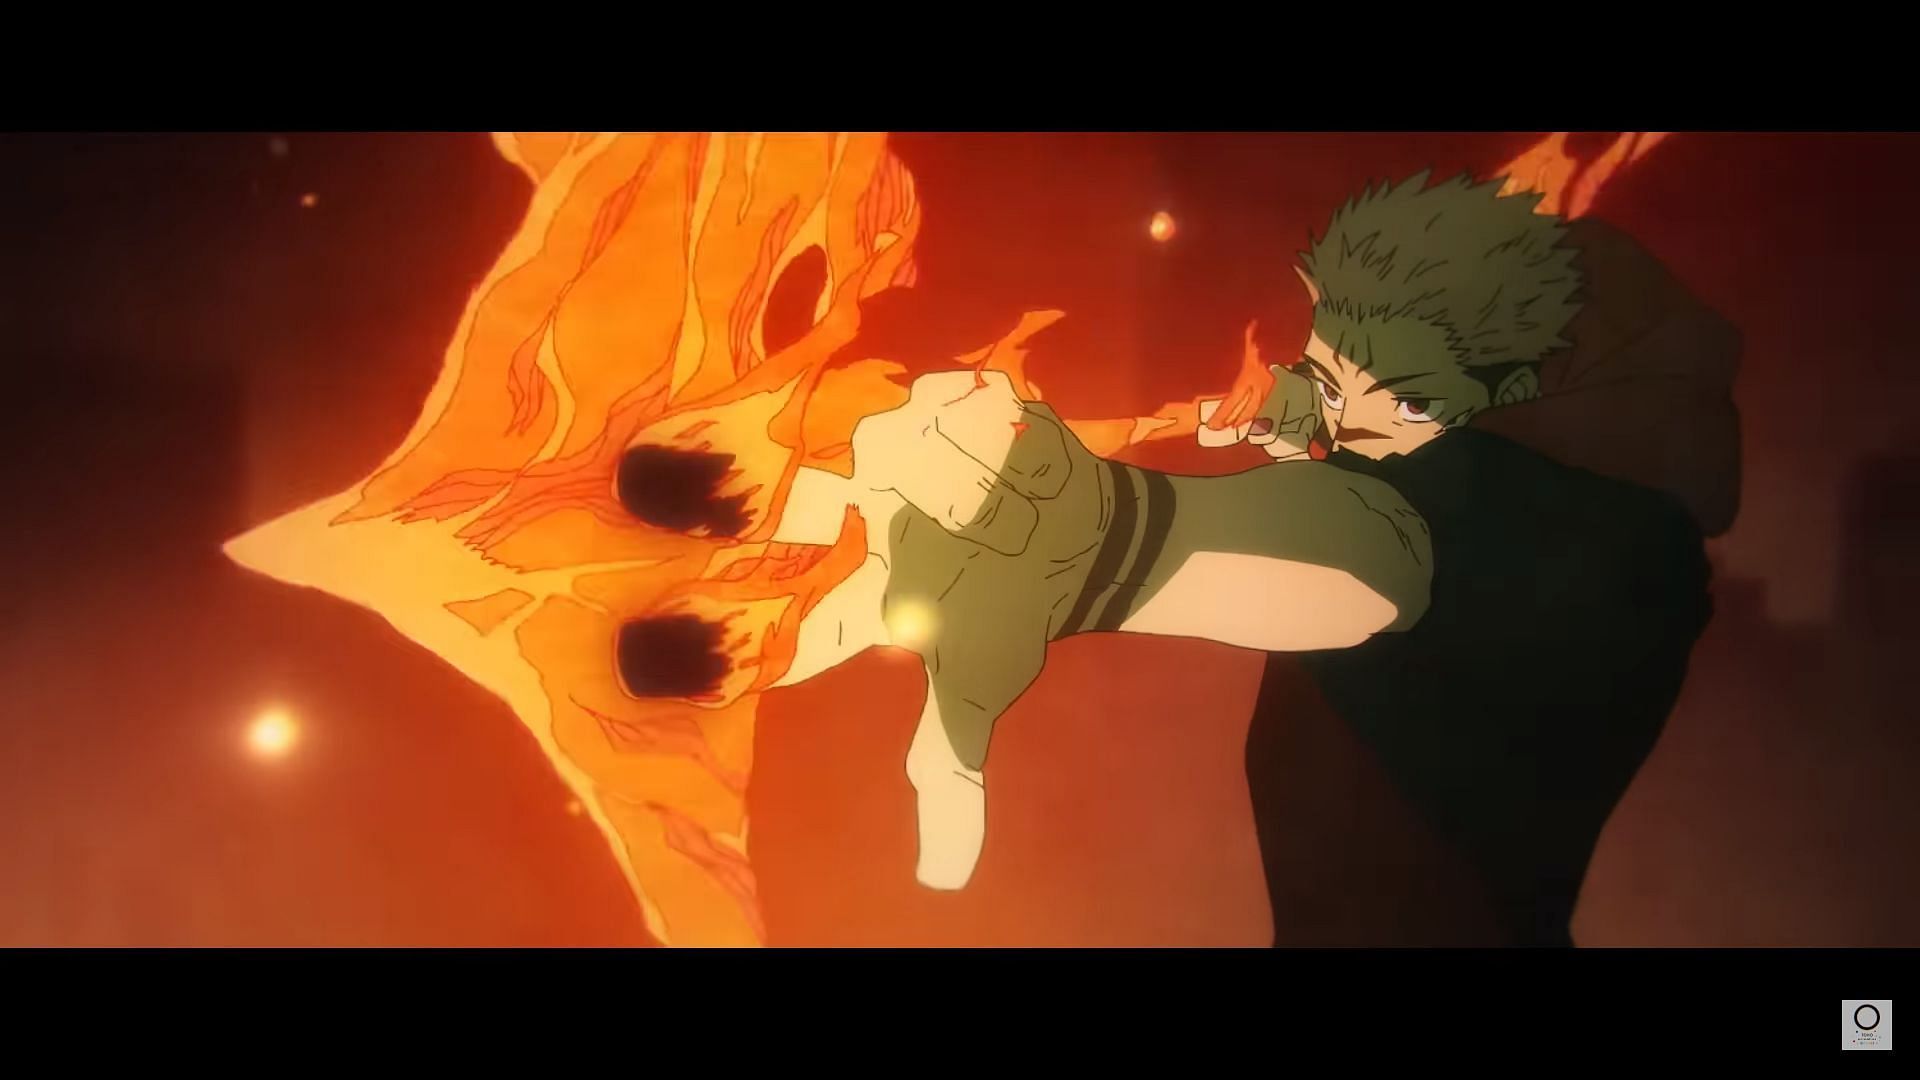 Ryomen Sukuna uses Flame Arrow in the latest Jujutsu Kaisen Trailer (Image via MAPPA)